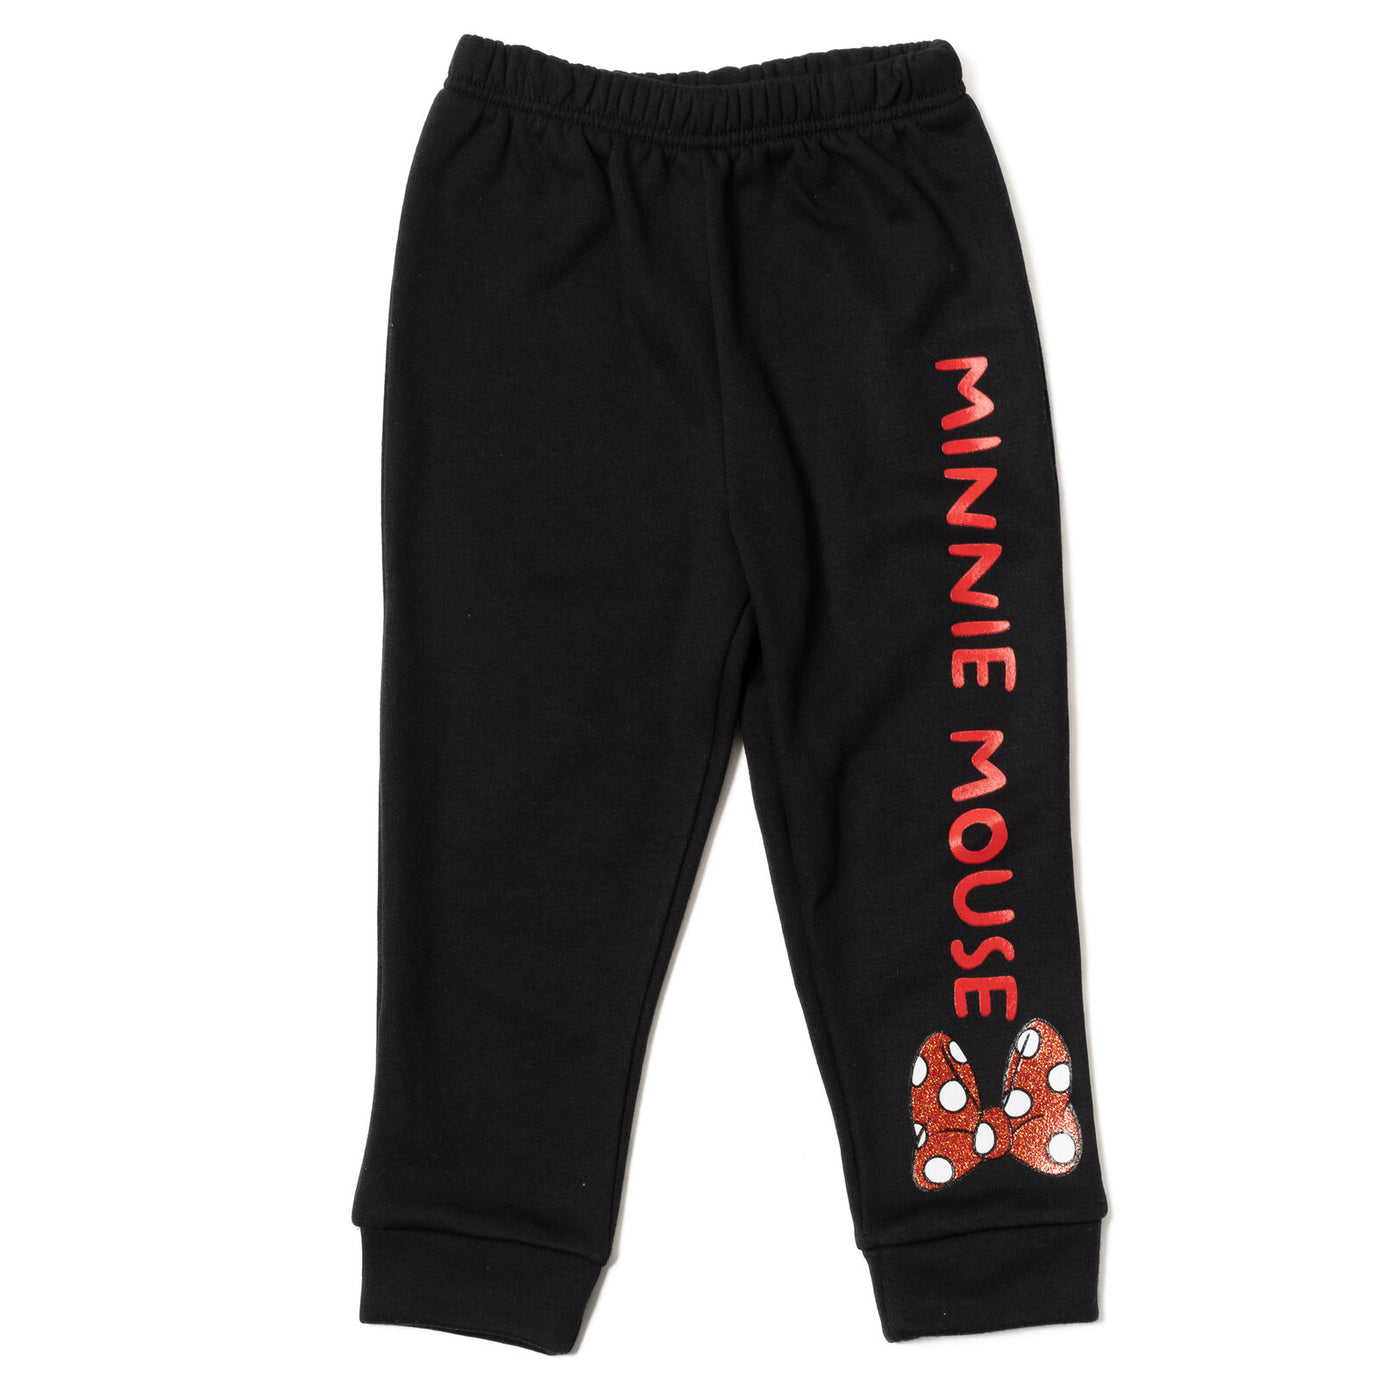 Minnie Mouse Fleece Fashion Pullover Sweatshirt & Pants